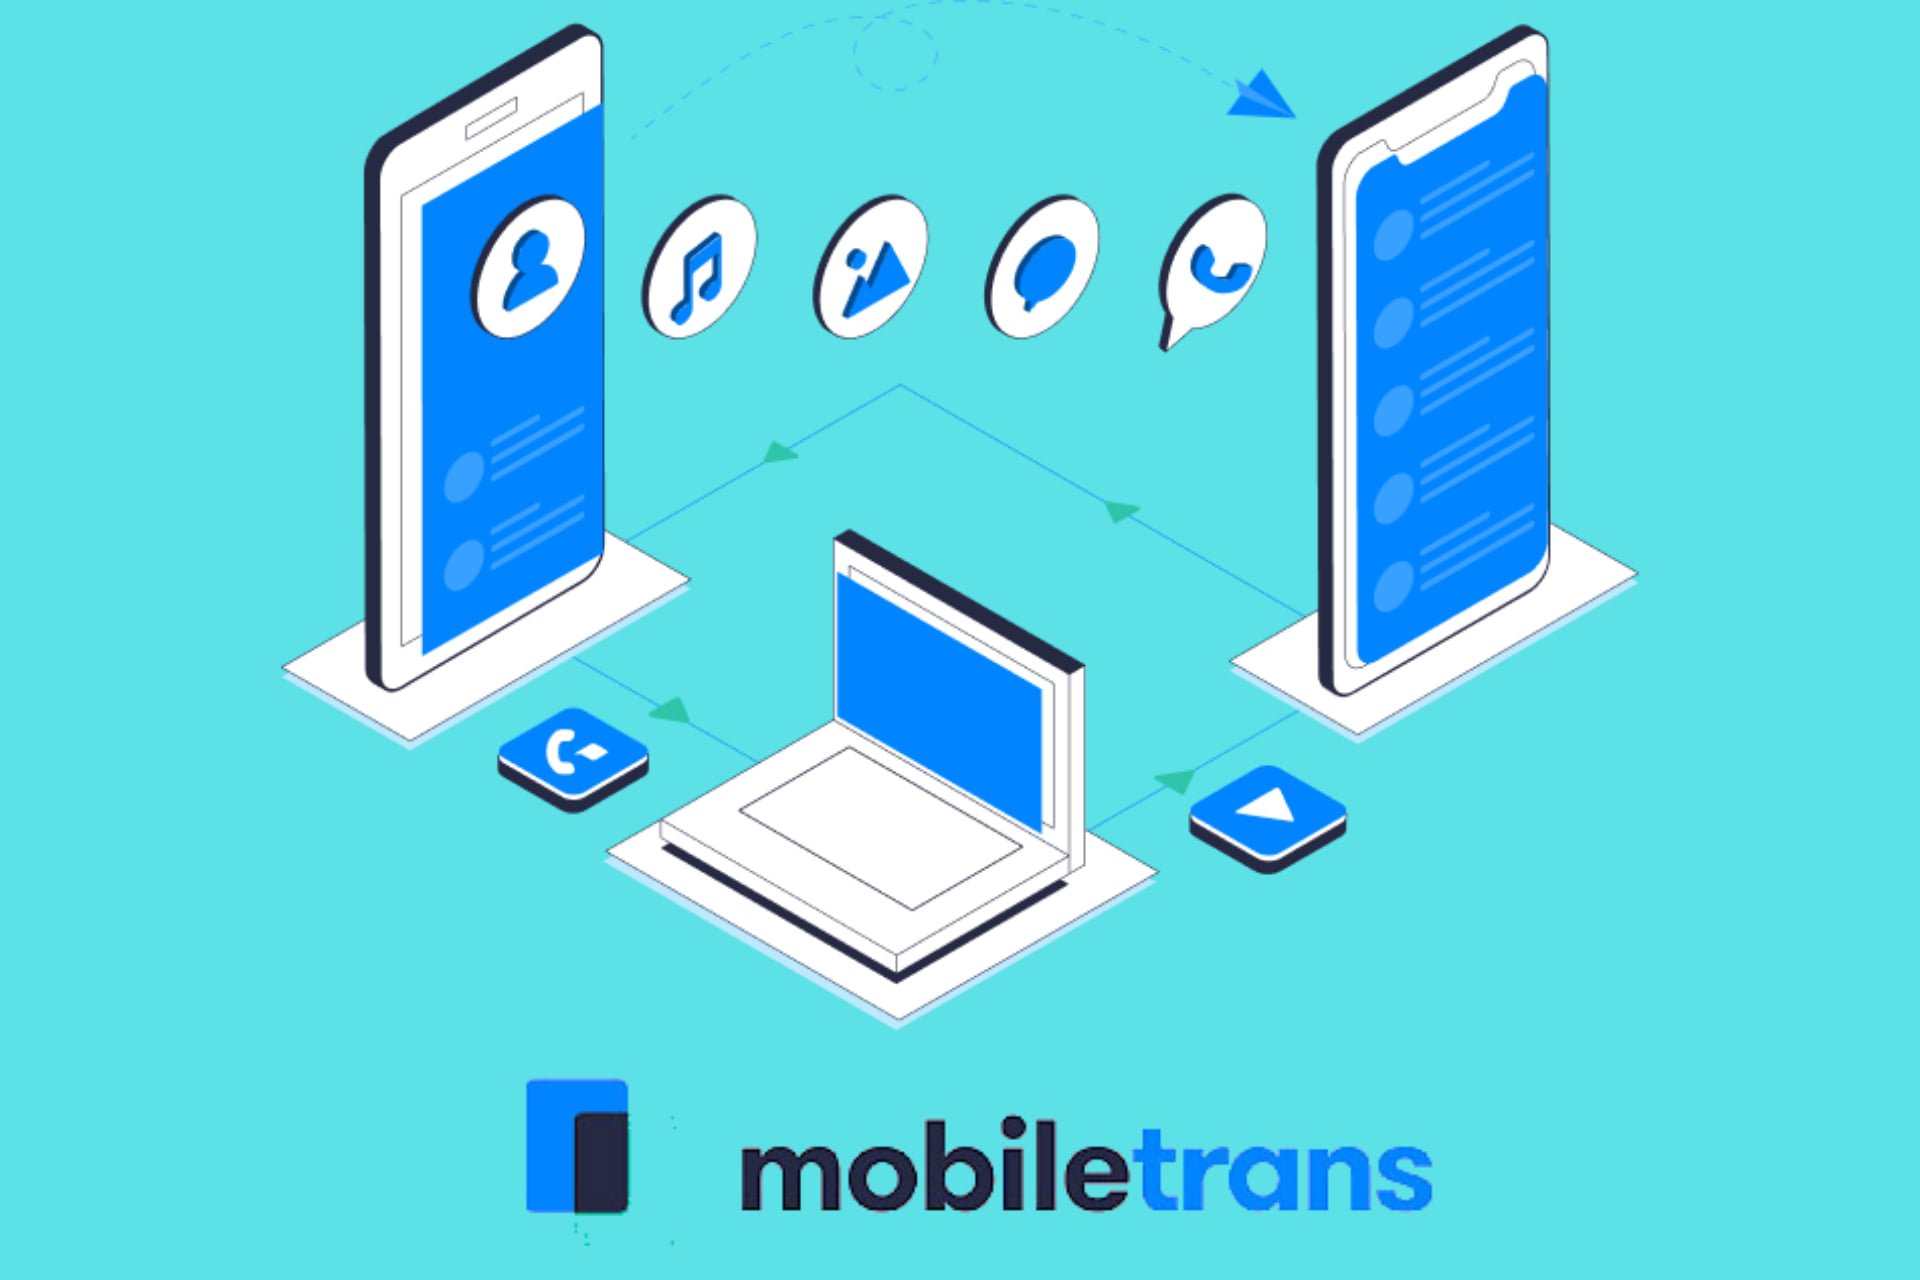 wondershare mobiletrans review